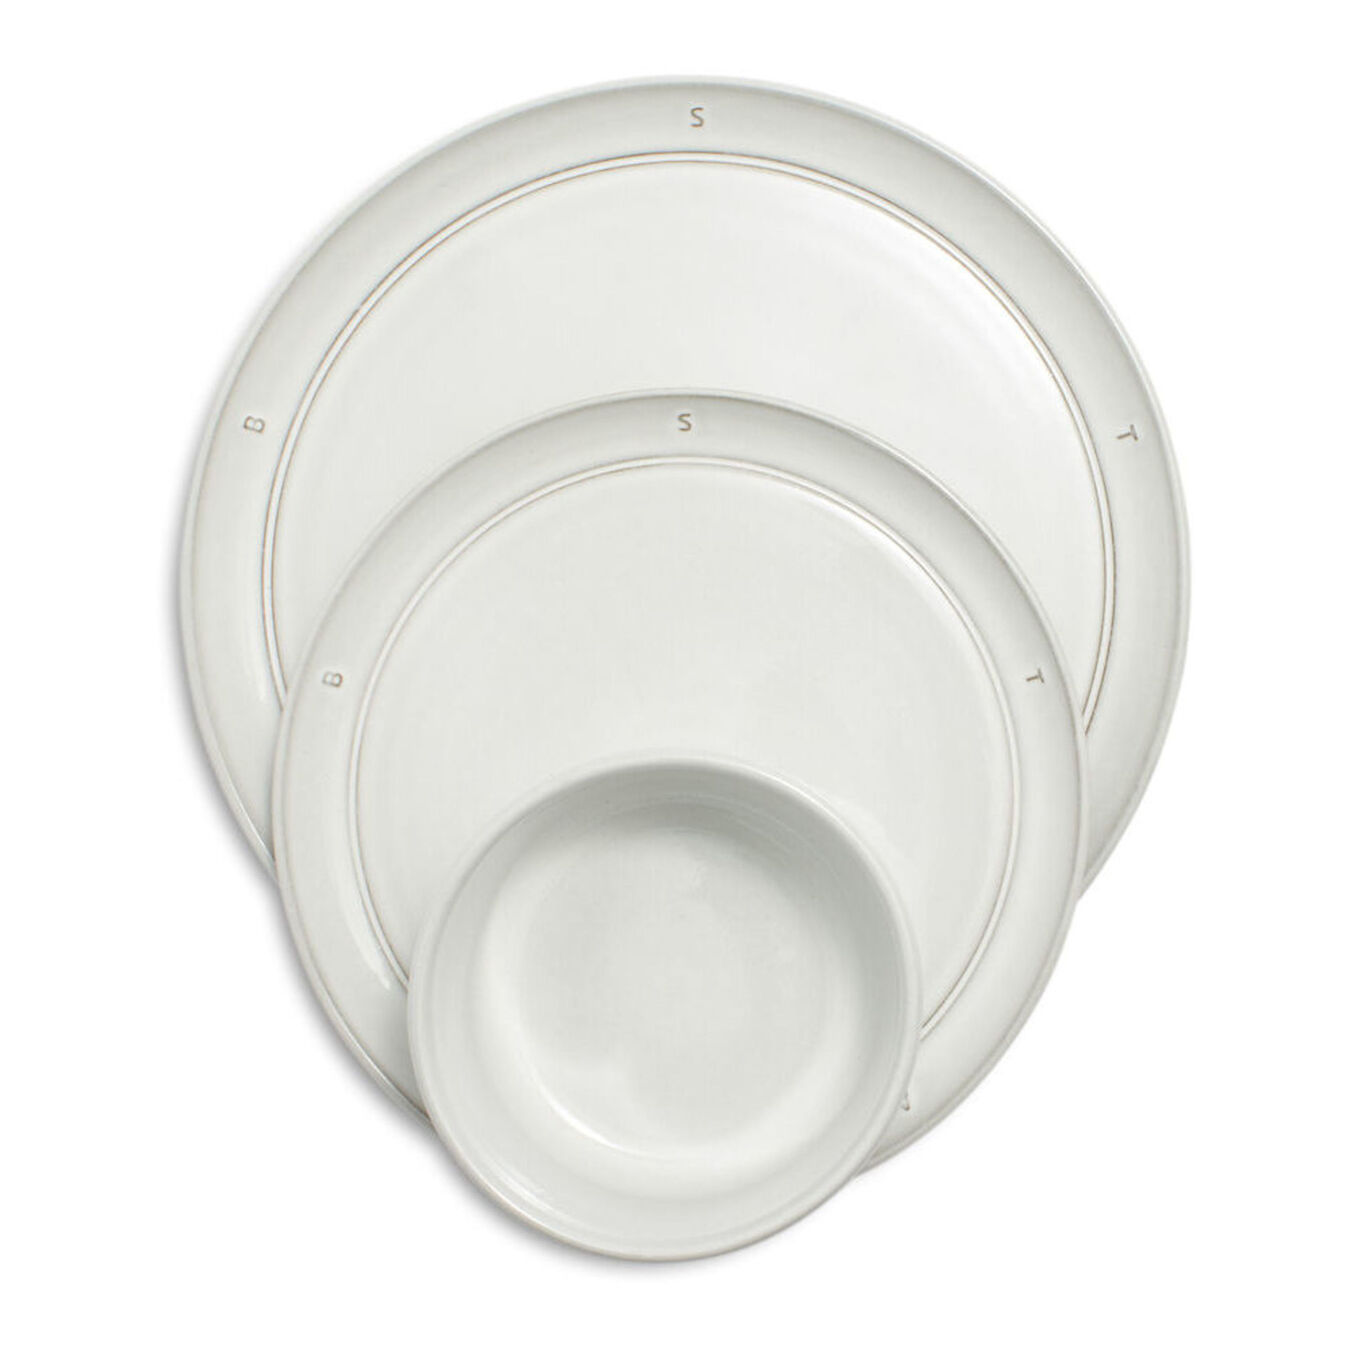 Serving set, 12 Piece | Off-White | ceramic,,large 1